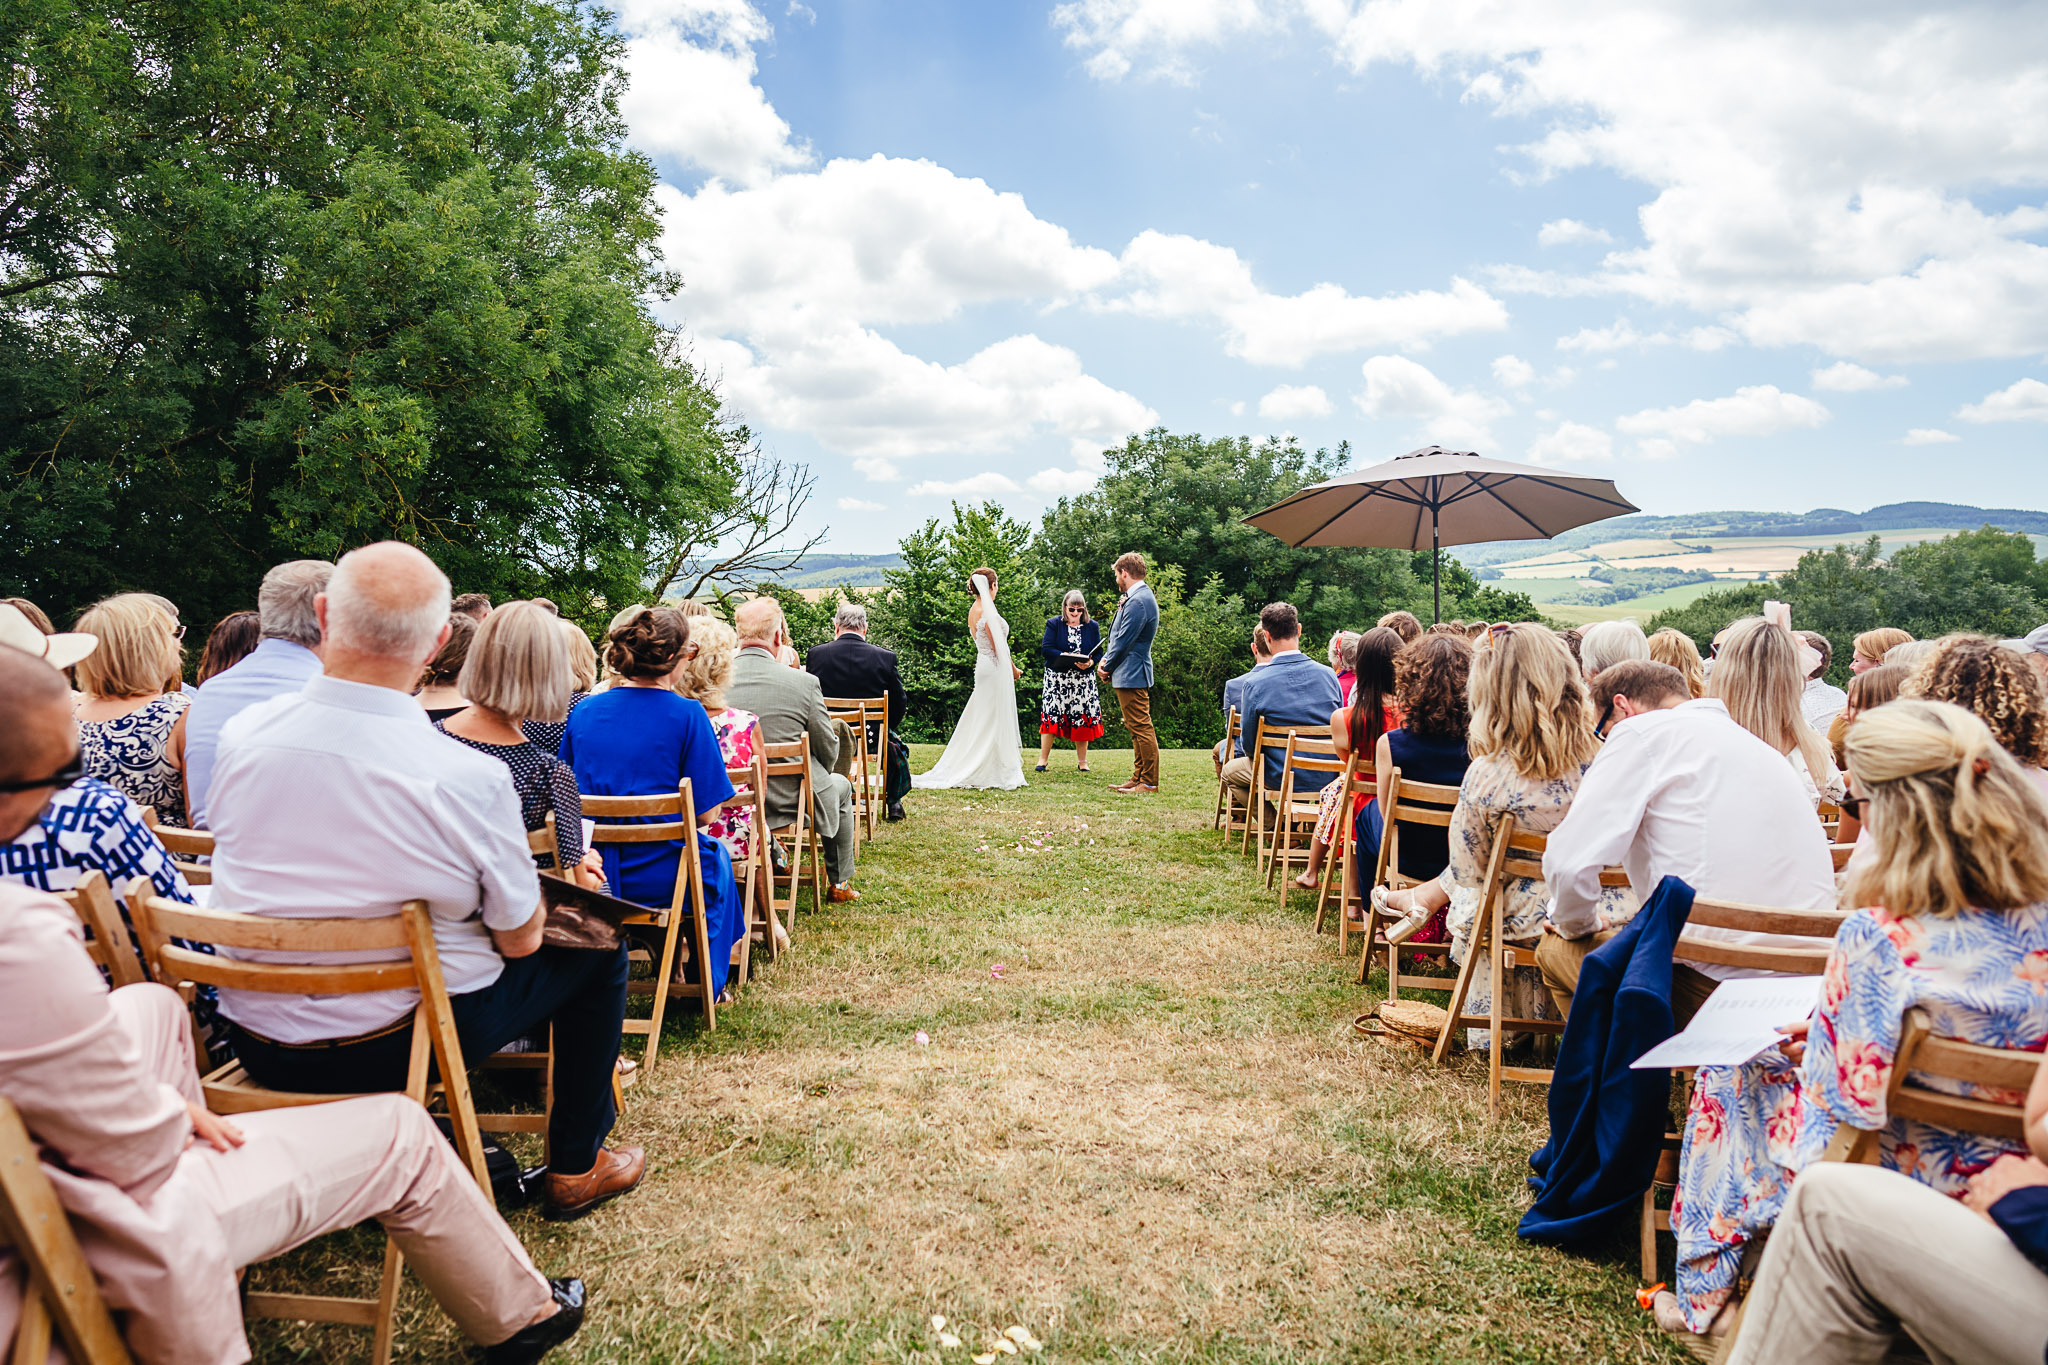 Higher Eggbeer Farm wedding ceremony captured by Devon wedding photographer